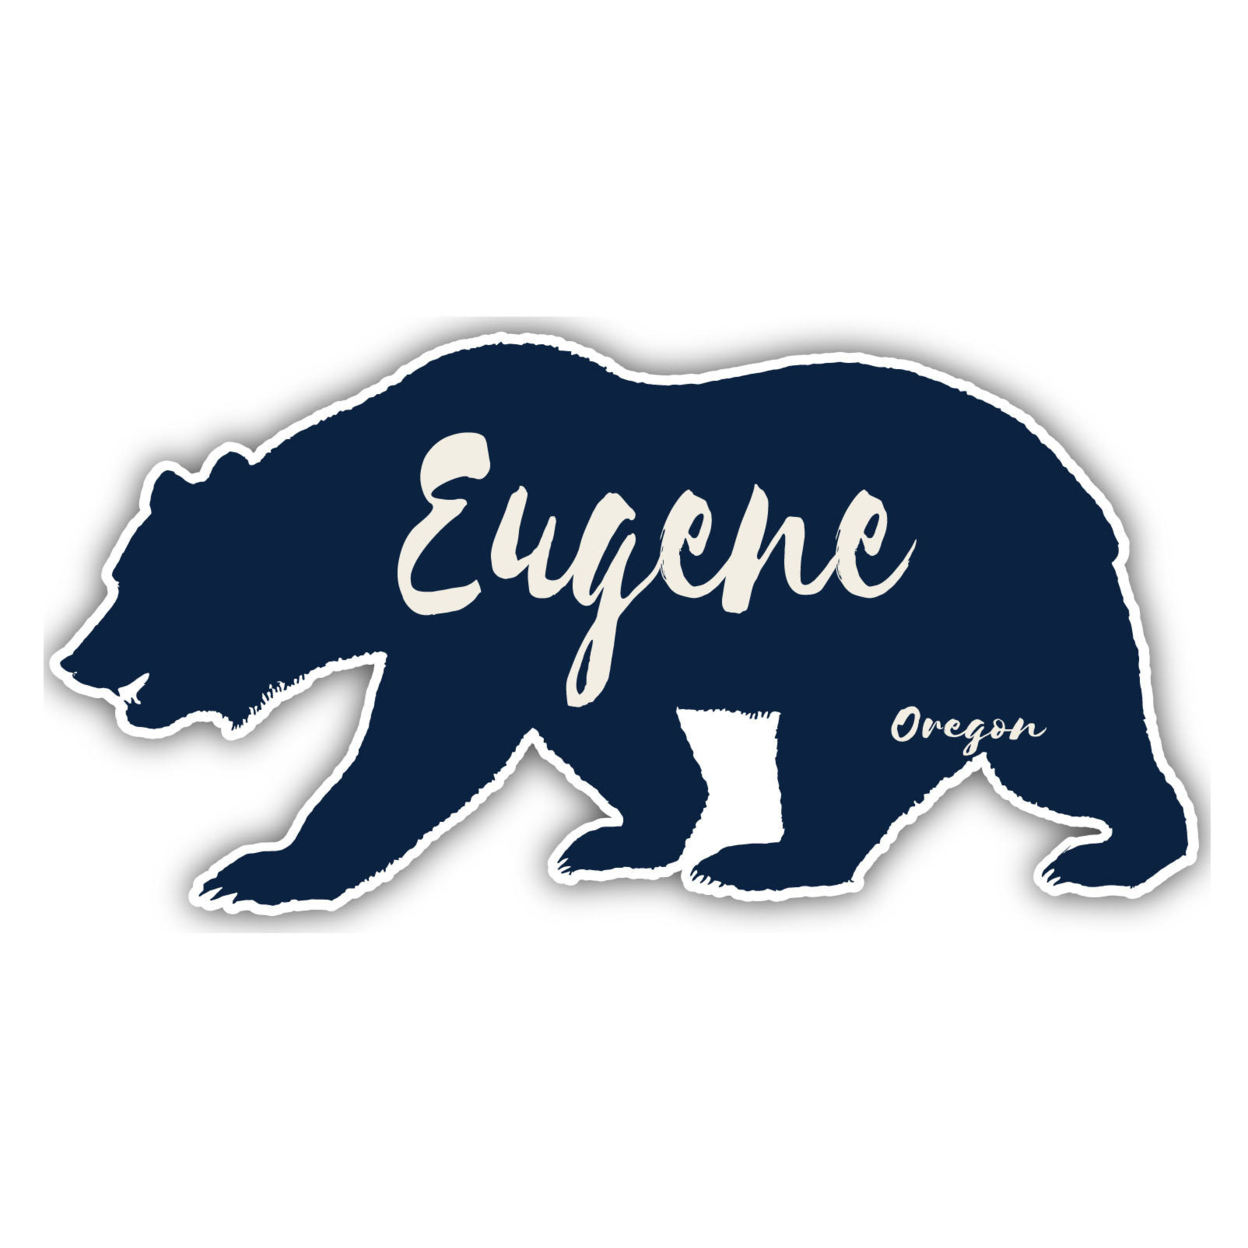 Eugene Oregon Souvenir Decorative Stickers (Choose Theme And Size) - 4-Pack, 6-Inch, Bear